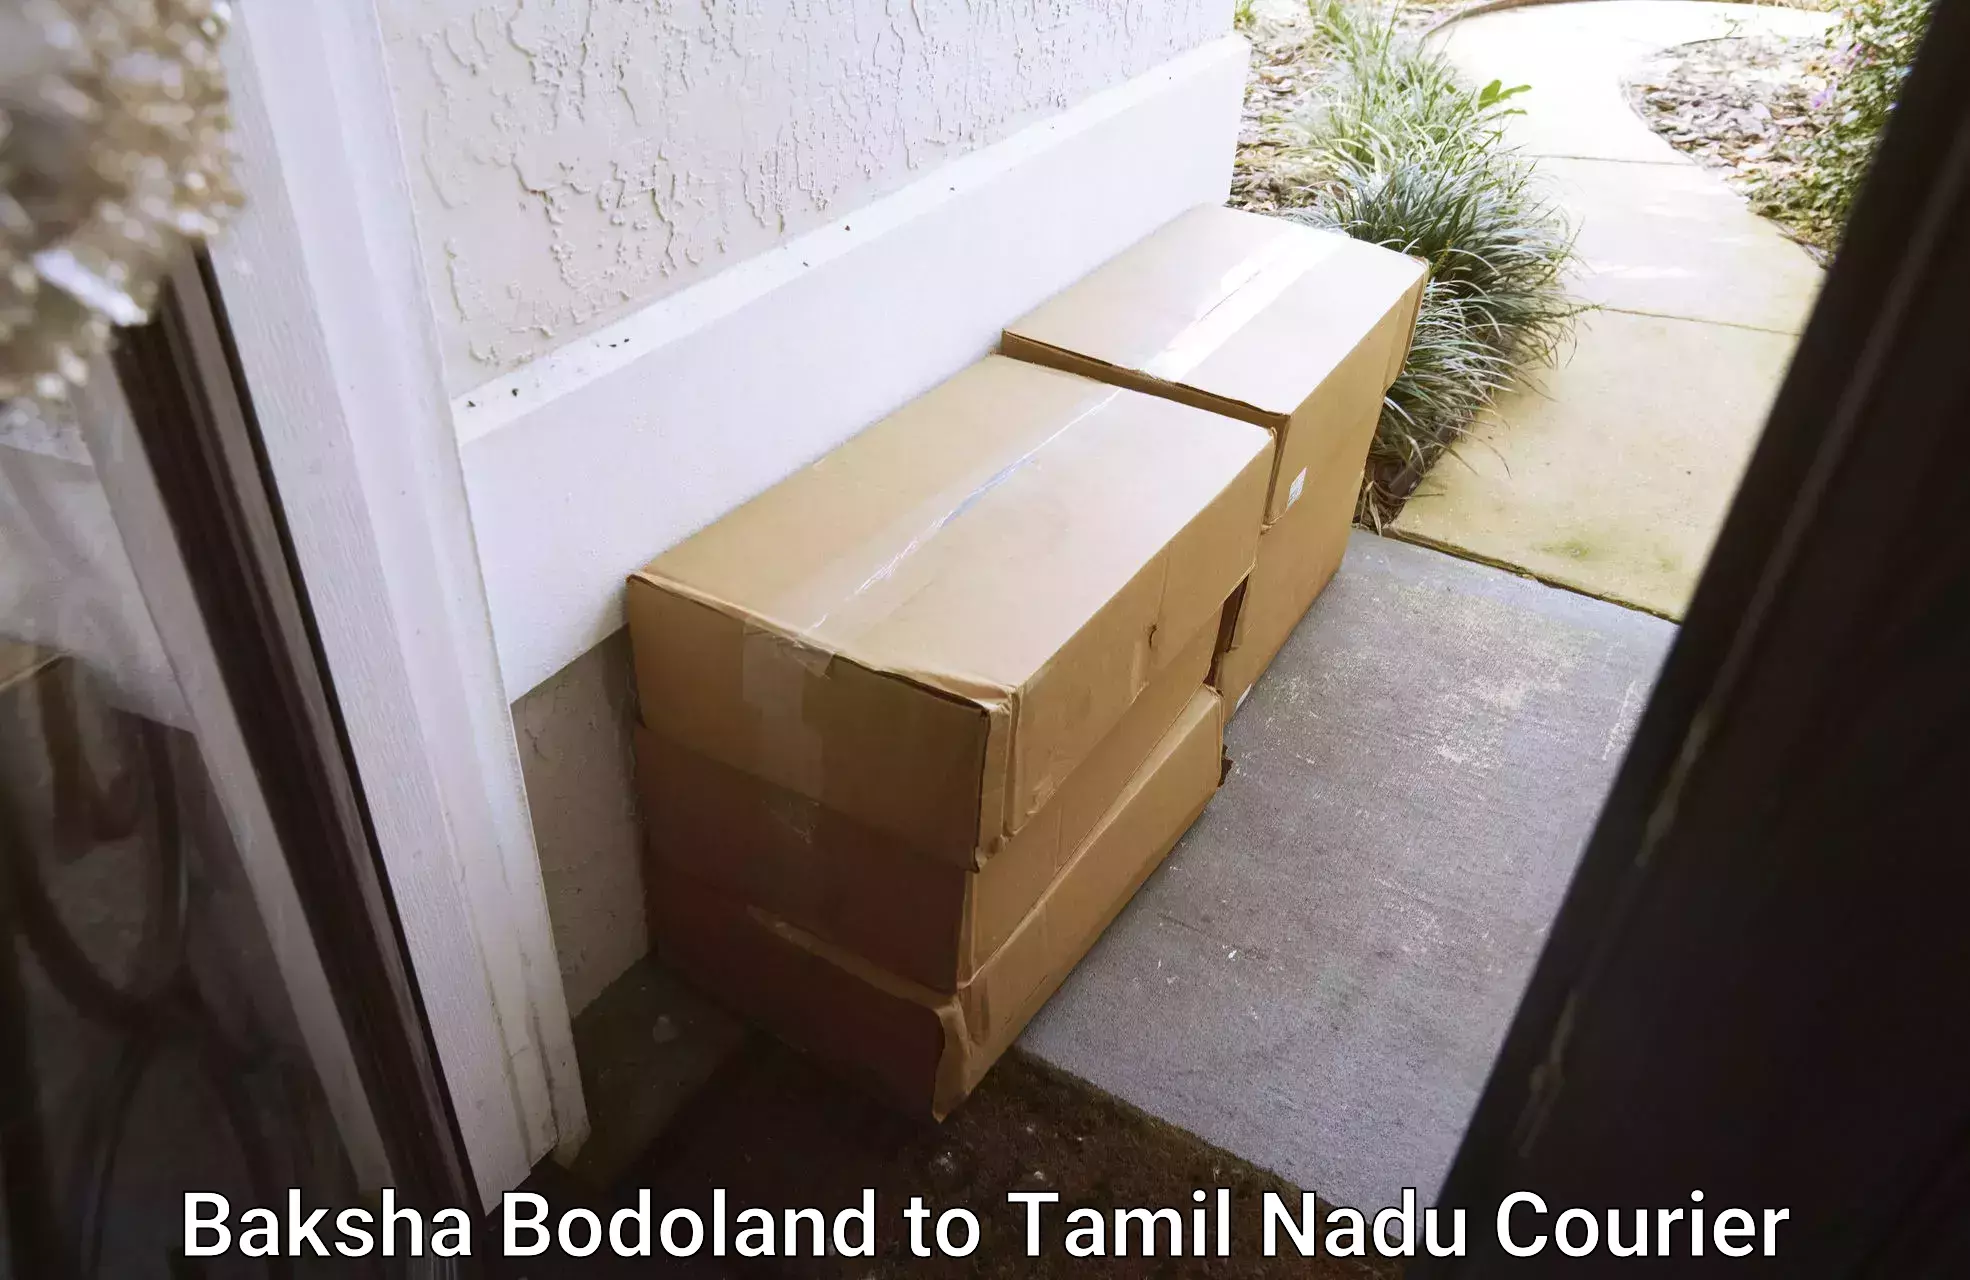 Courier service booking in Baksha Bodoland to Mettala